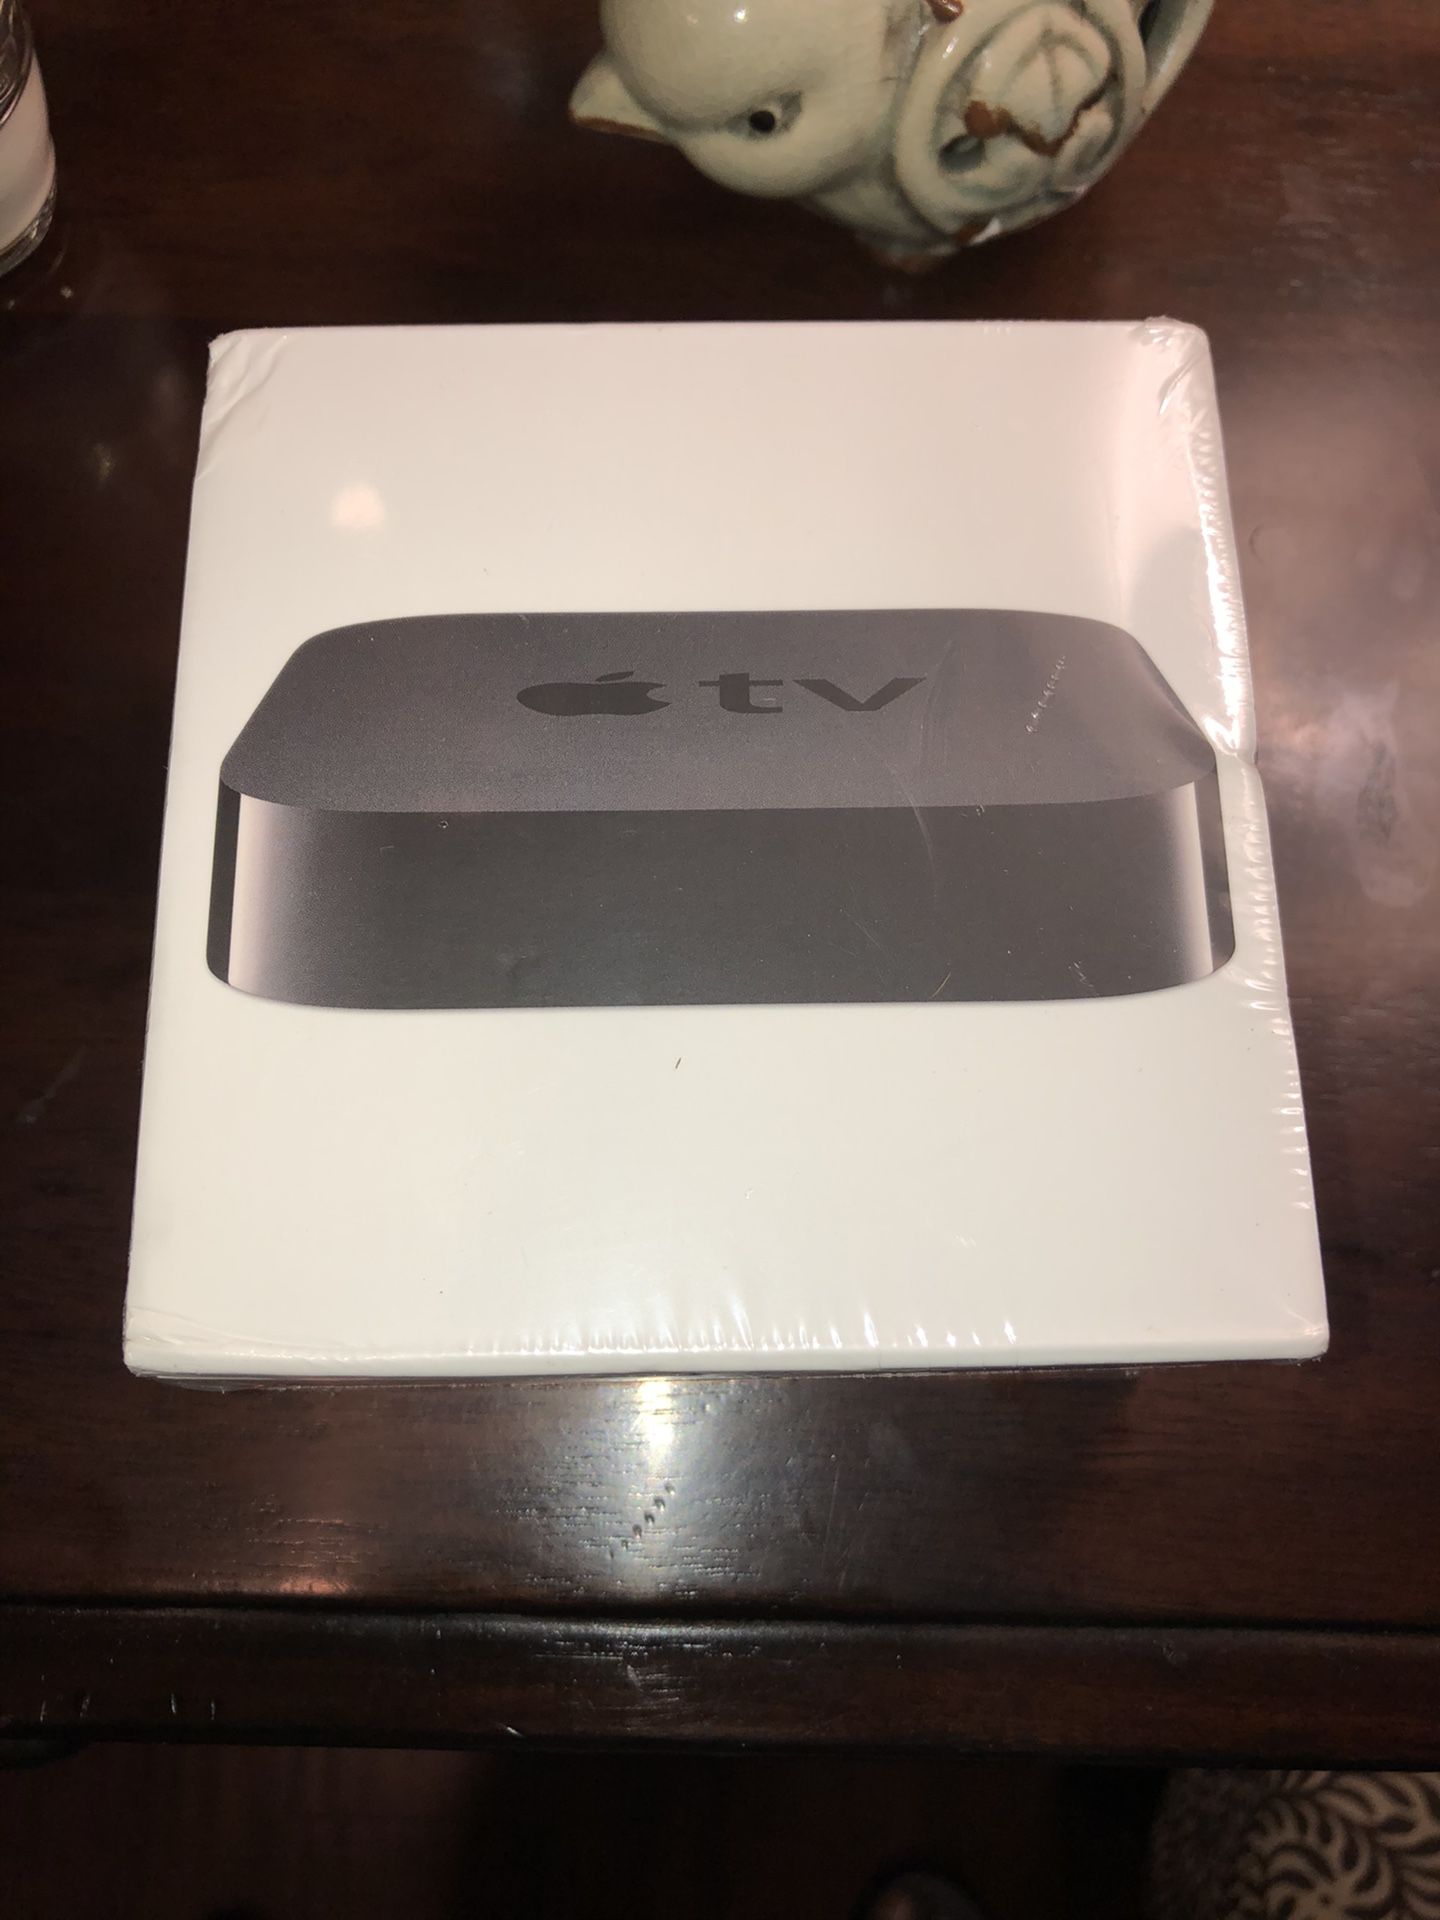 Apple TV 3rd Gen-New in sealed box